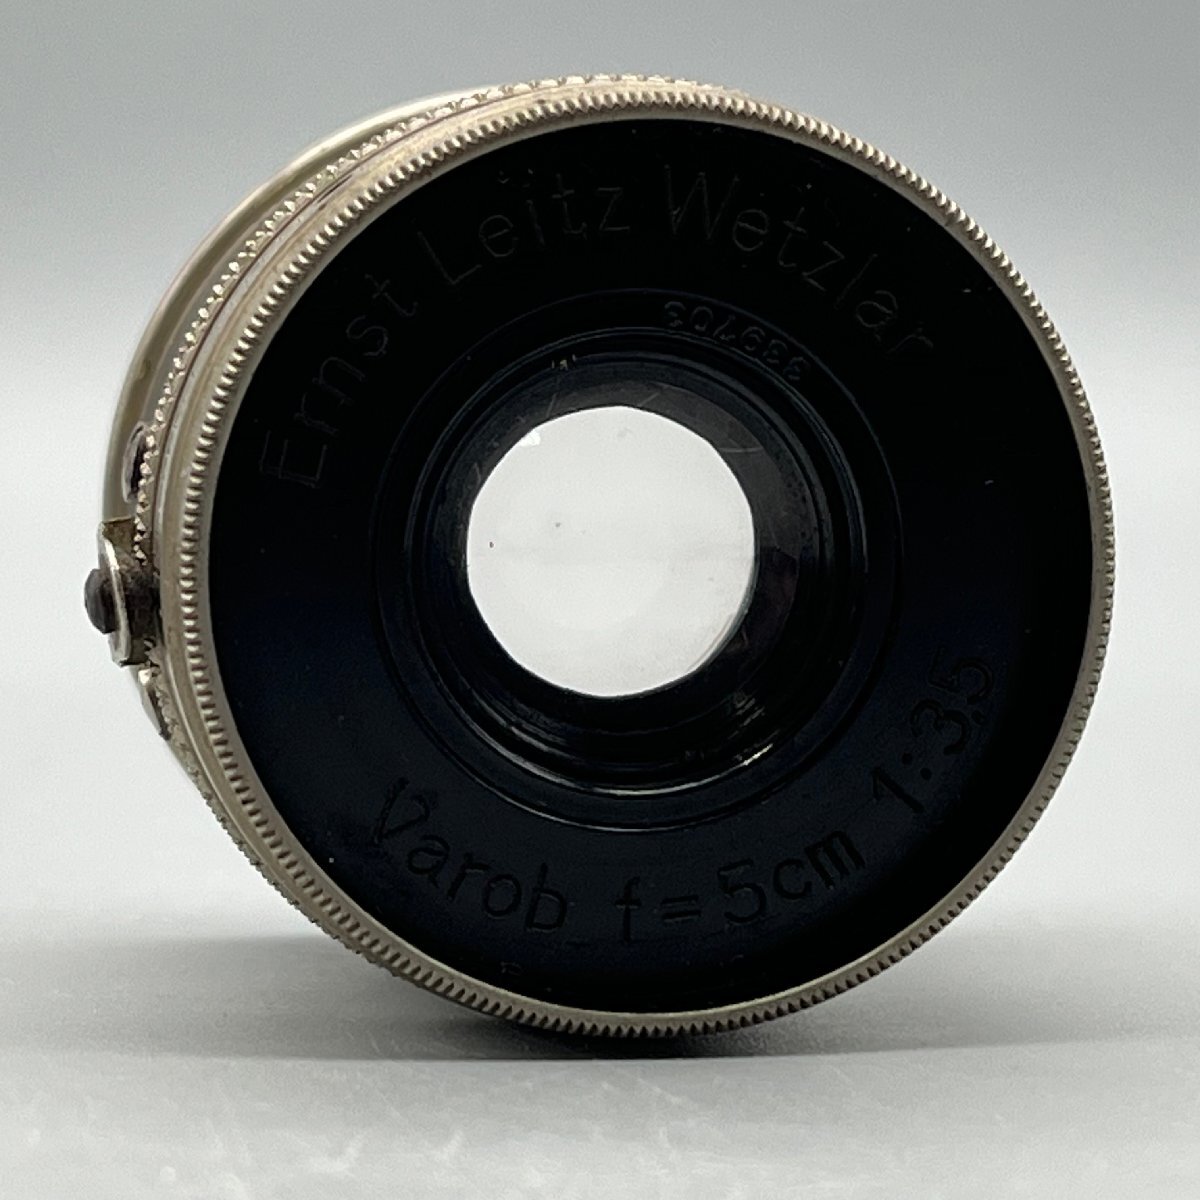 Varob 5cm f3.5 Ernst Leitz Wetzlar 50mm エルンスト ライツ ウェッツラー Leica ライカ 引き伸ばしレンズの画像7